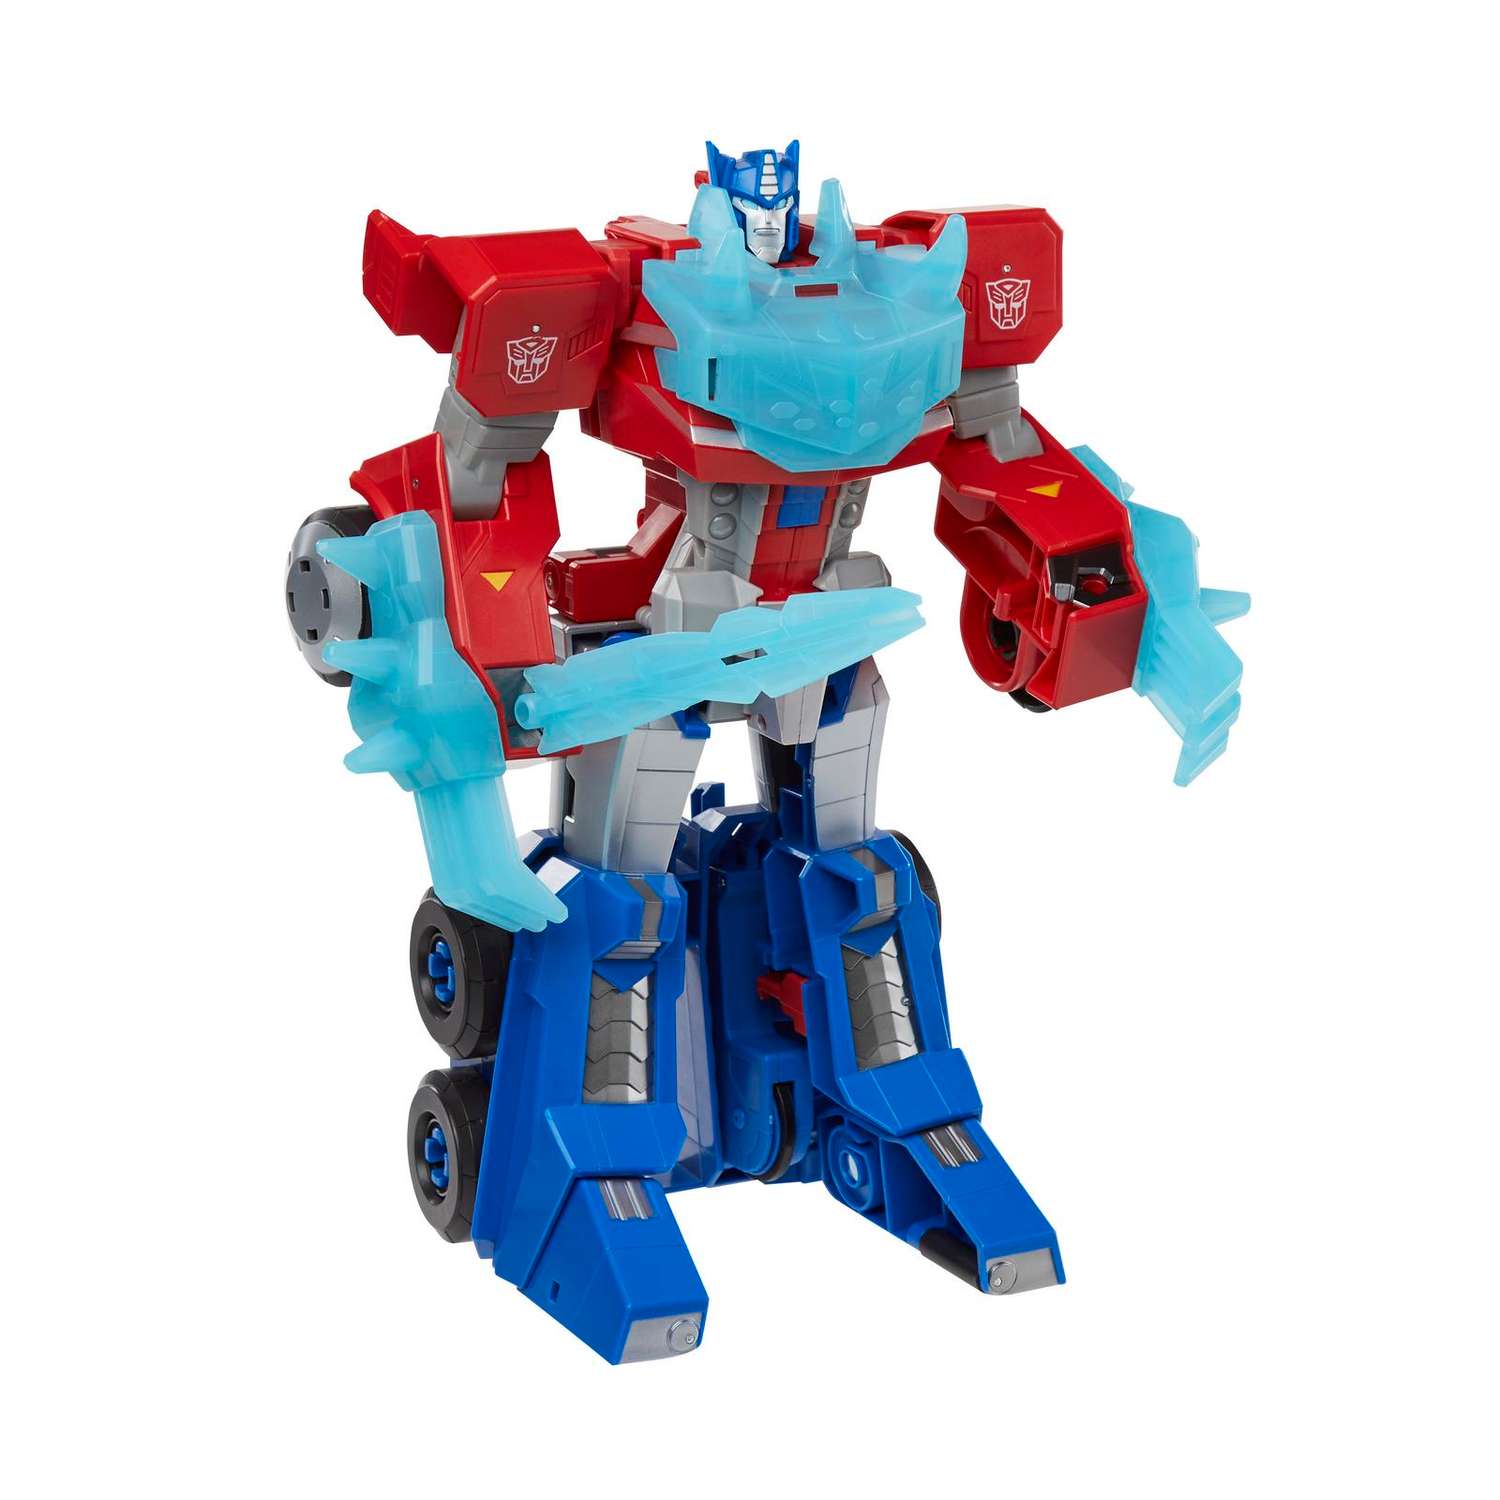 Фигурка Transformers Оптимус Прайм с автоматической трансформацией F27315X6 - фото 12